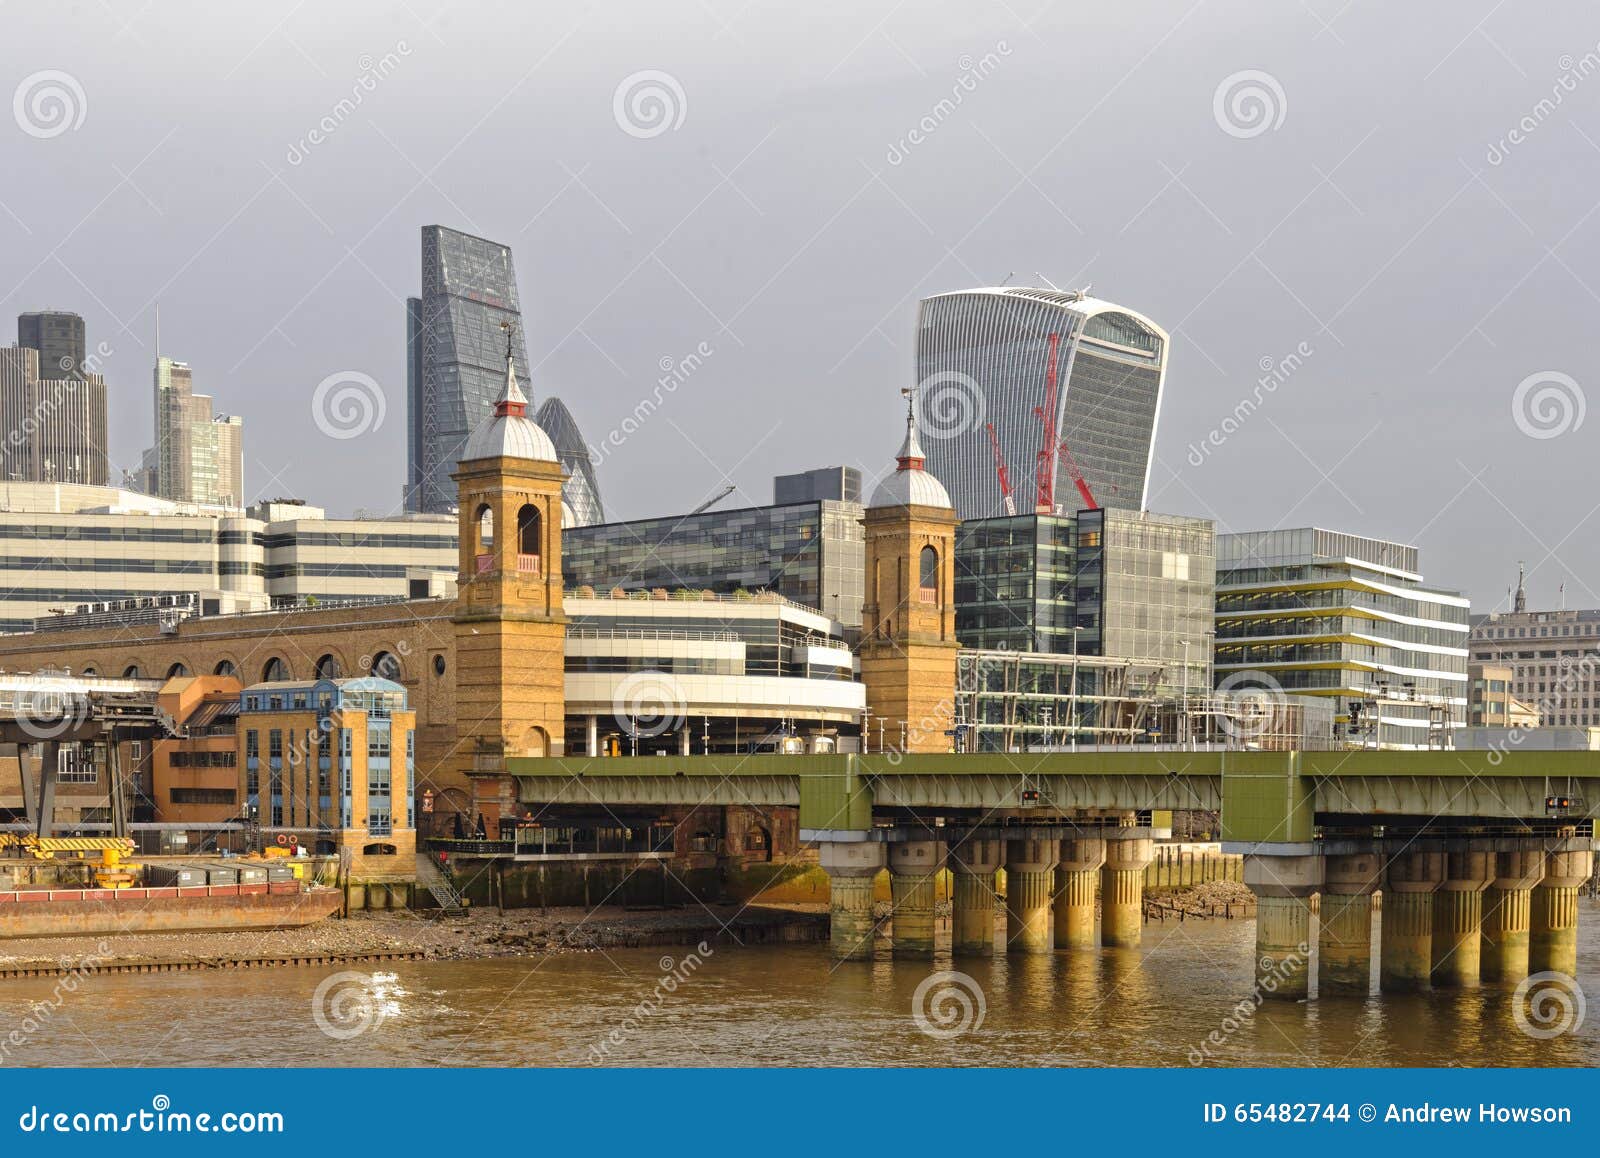 London under construction editorial stock image. Image of english ...